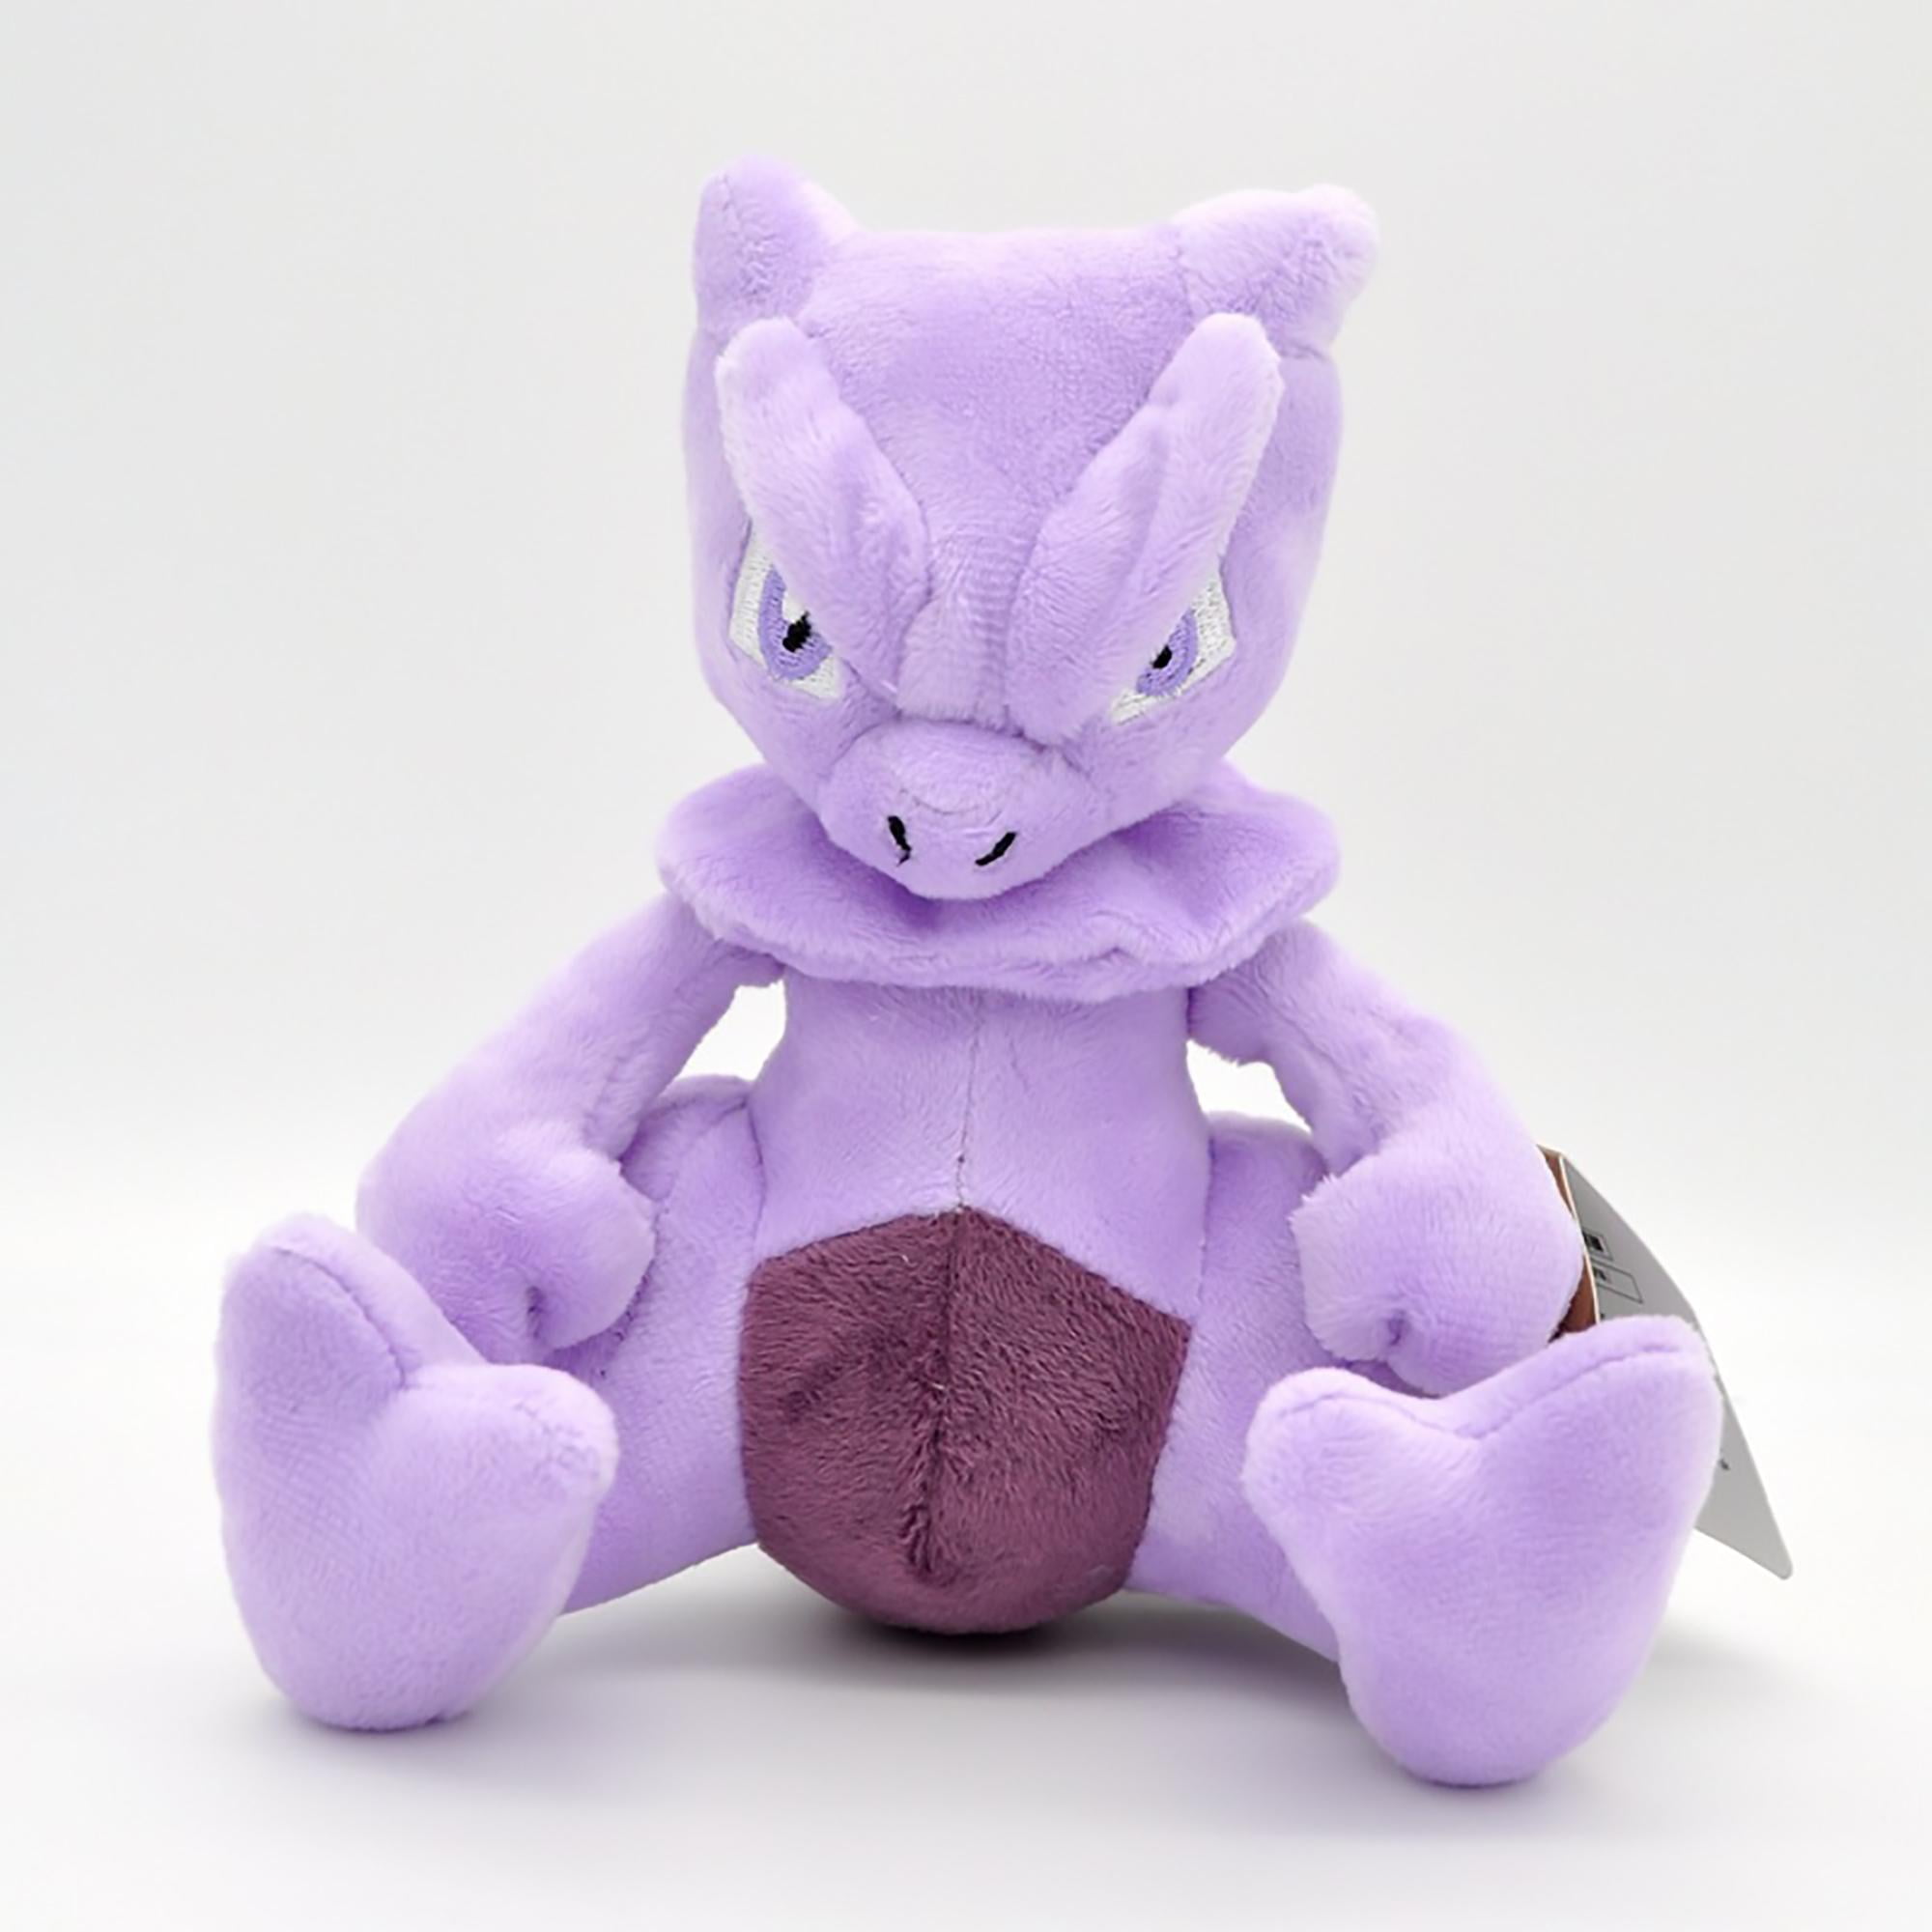 6" Cute Pokemon Mewtwo Kids Toy Soft Plush Stuffed Doll Toy Birthday Gift New 